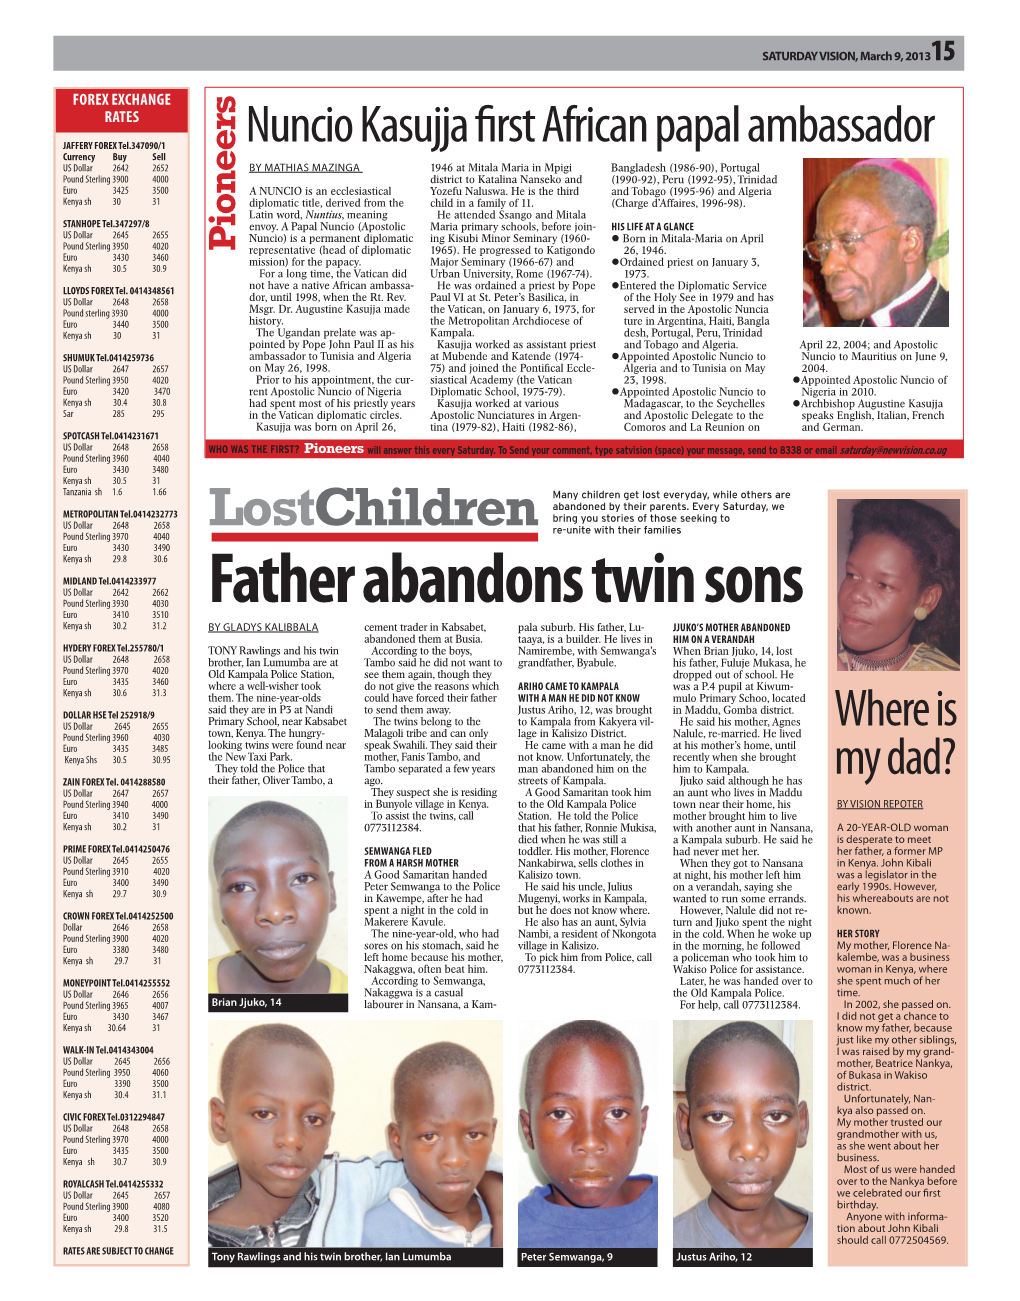 Father Abandons Twin Sons Euro 3410 3510 Kenya Sh 30.2 31.2 by GLADYS KALIBBALA Cement Trader in Kabsabet, Pala Suburb